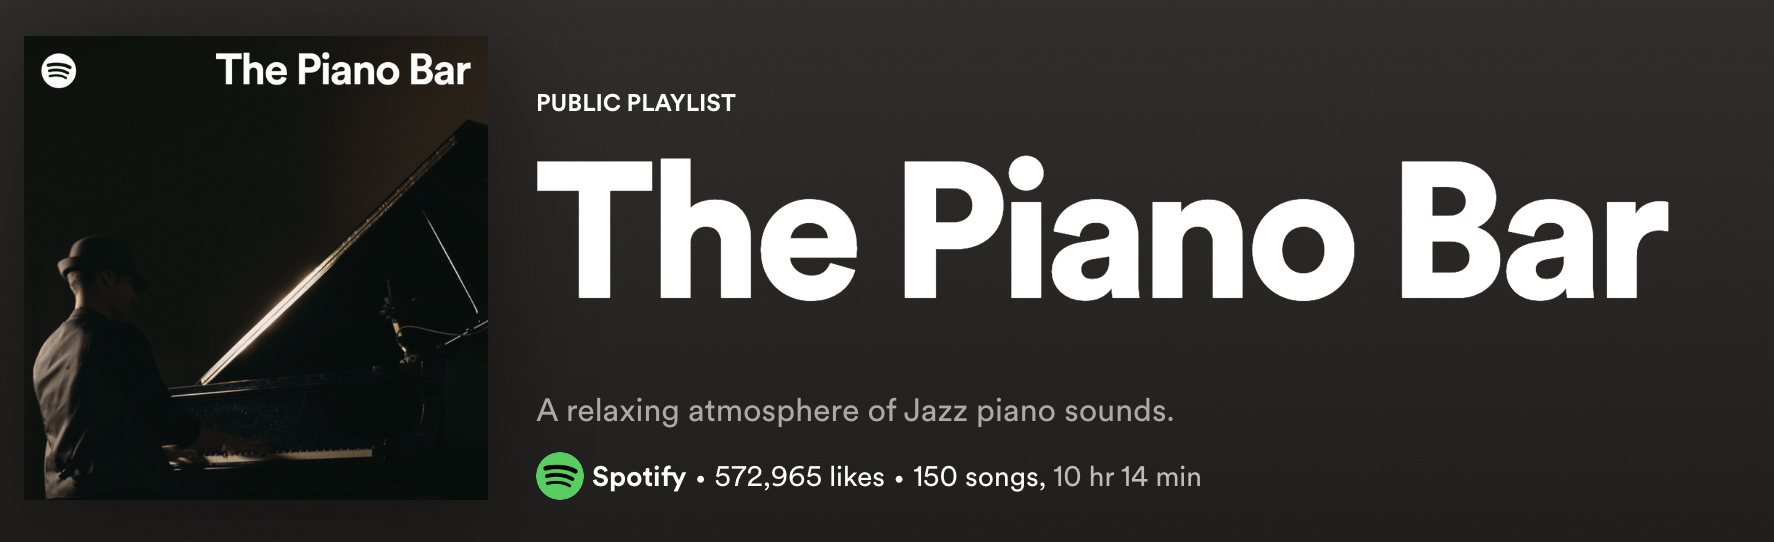 The Piano Bar Playlist